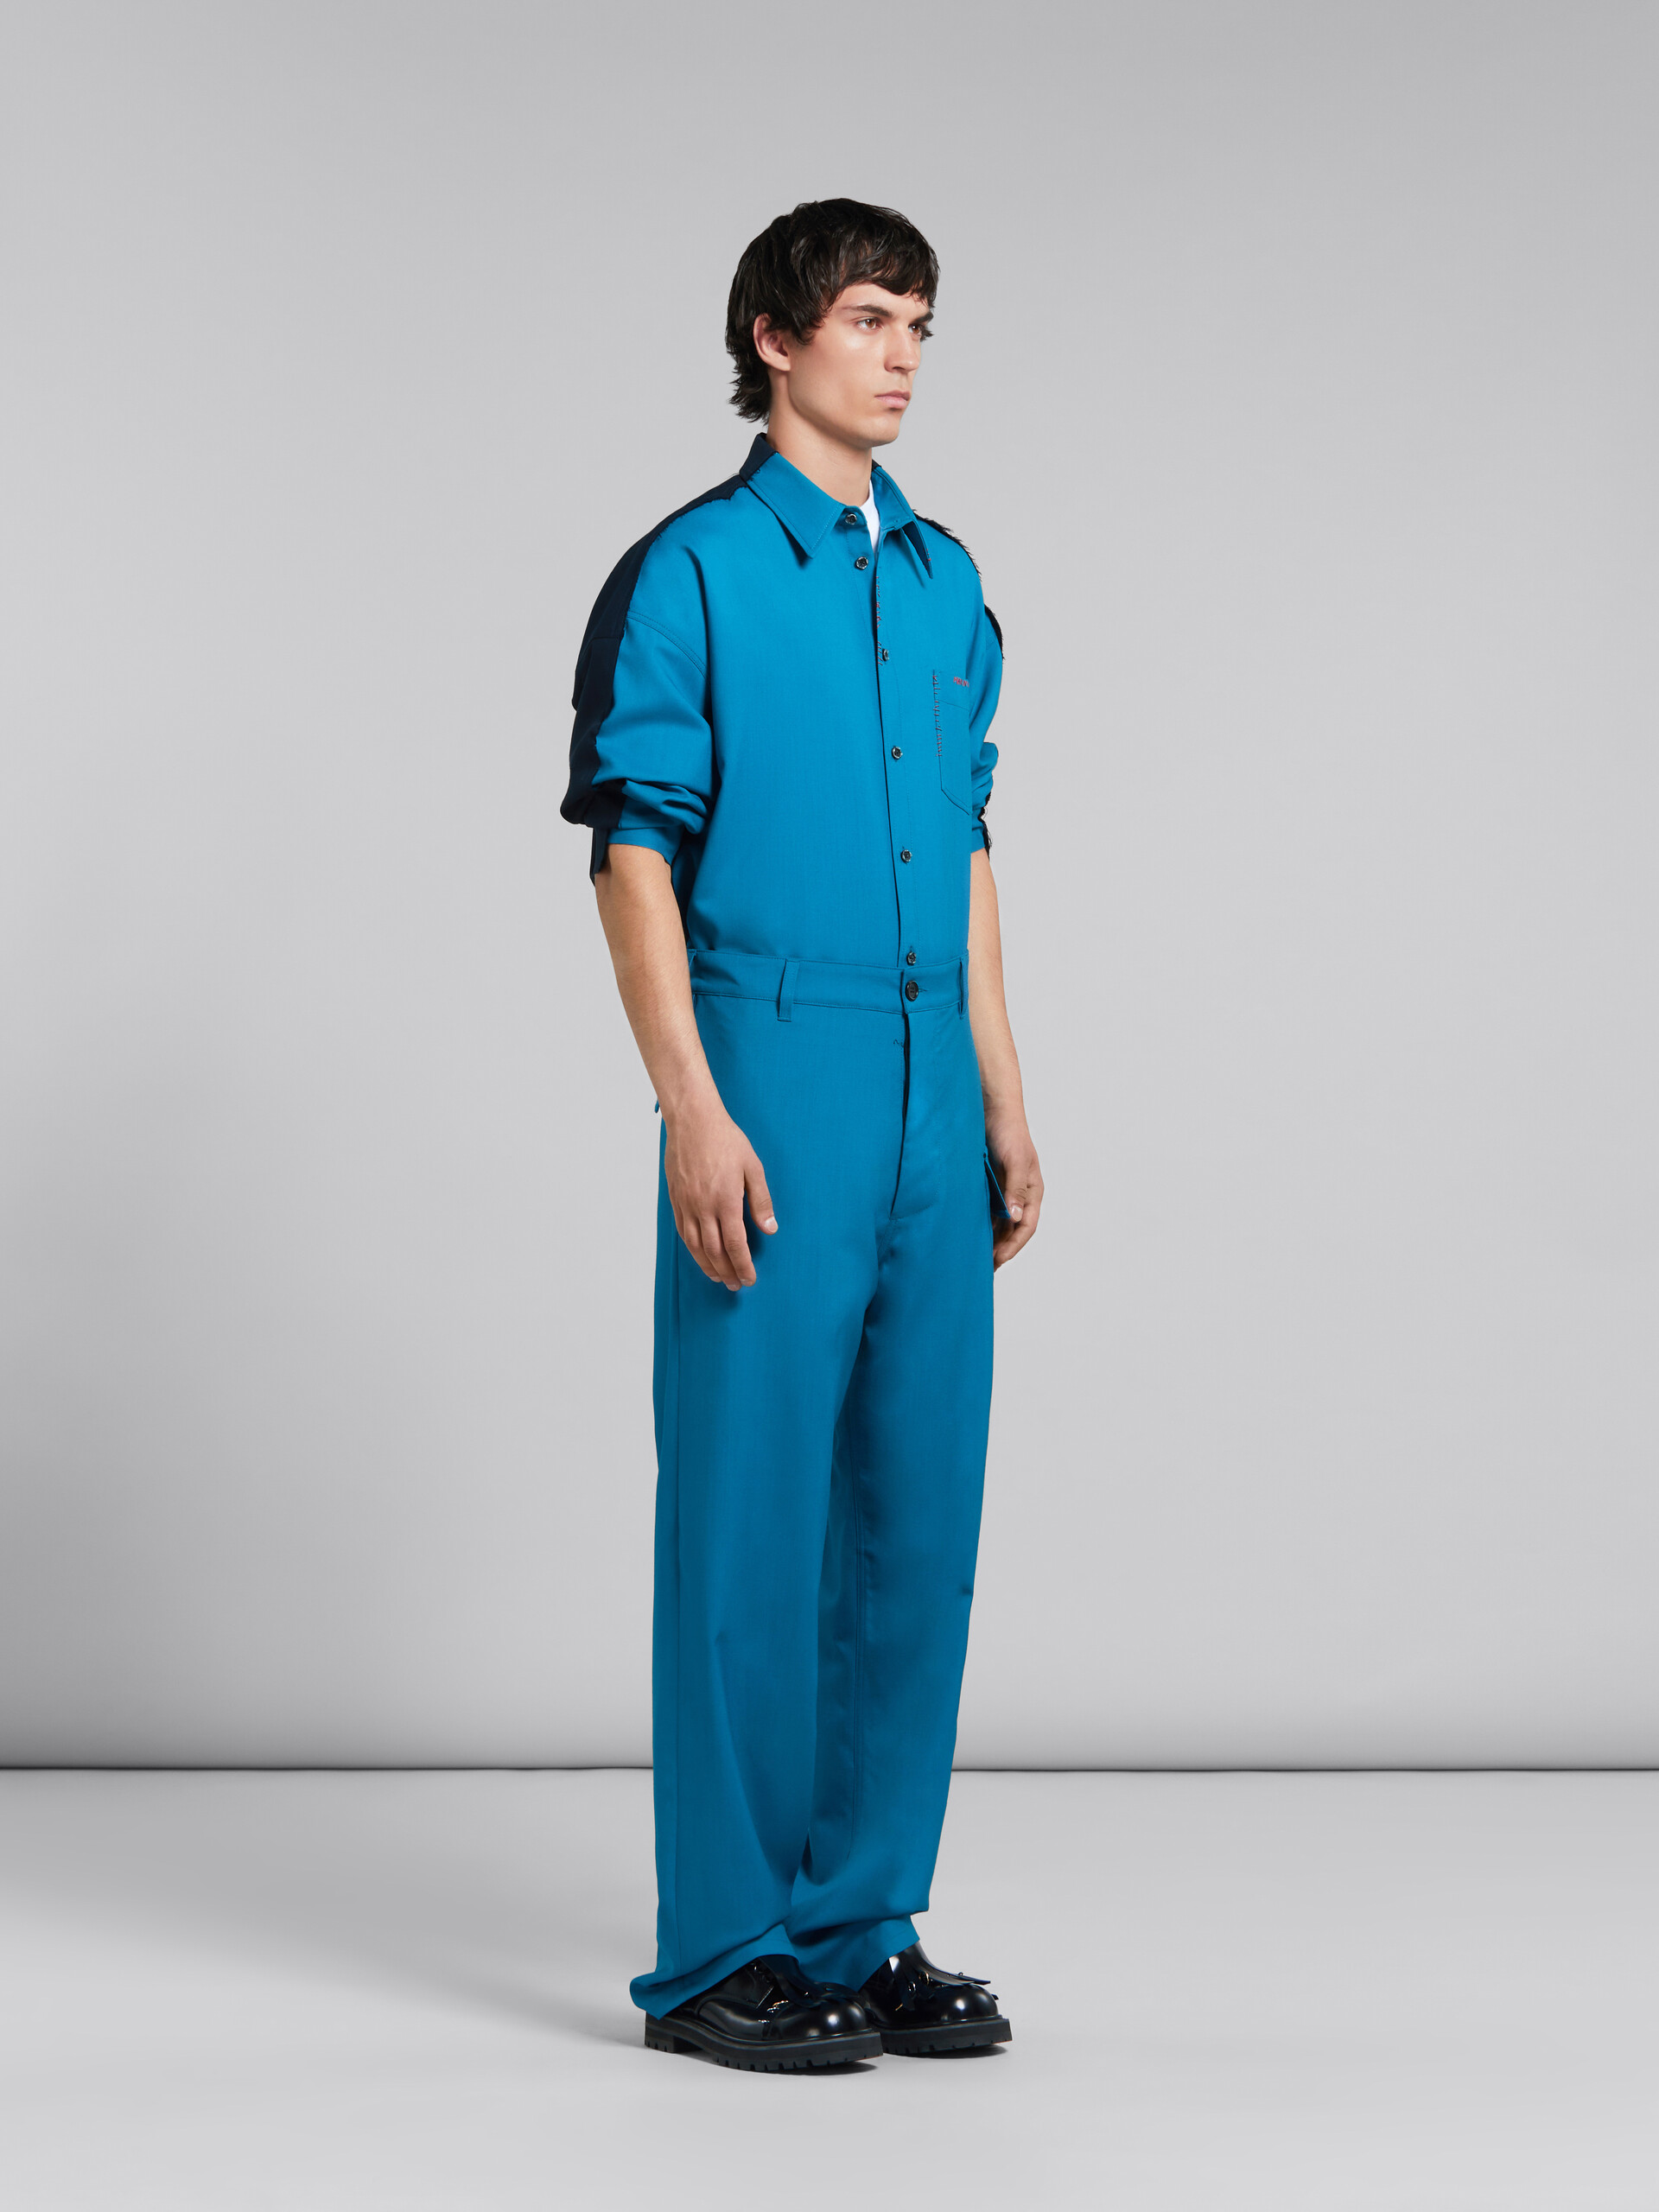 Pantaloni in fresco lana blu petrolio con tasche cargo - Pantaloni - Image 5